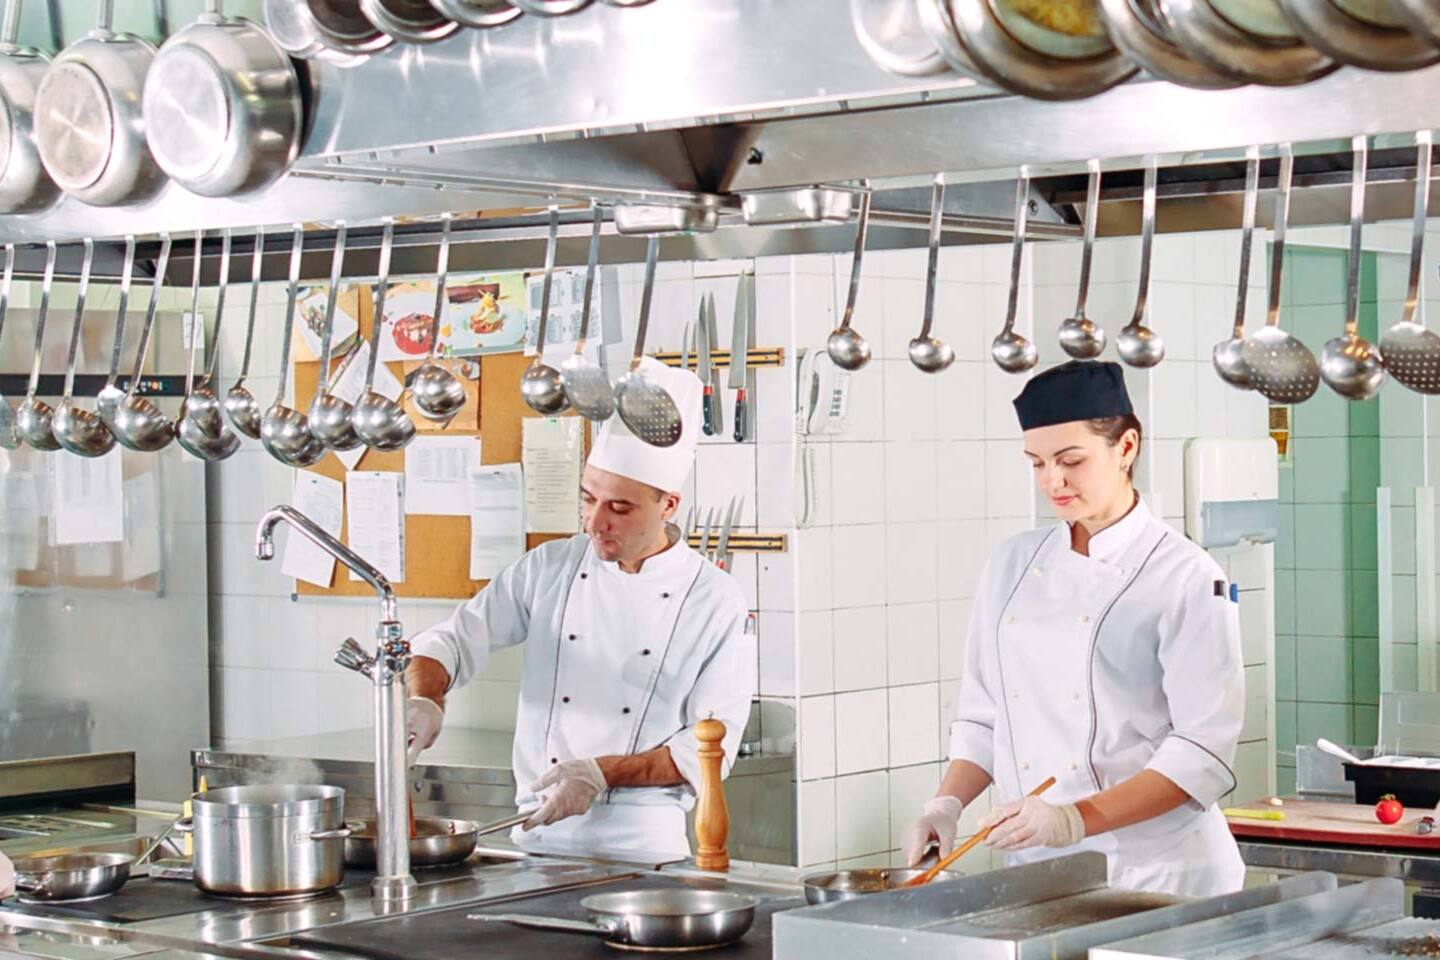 <img src= "commercial kitchen.jpg" alt="Group of chefs working in a large commercial kitchen.jpg">